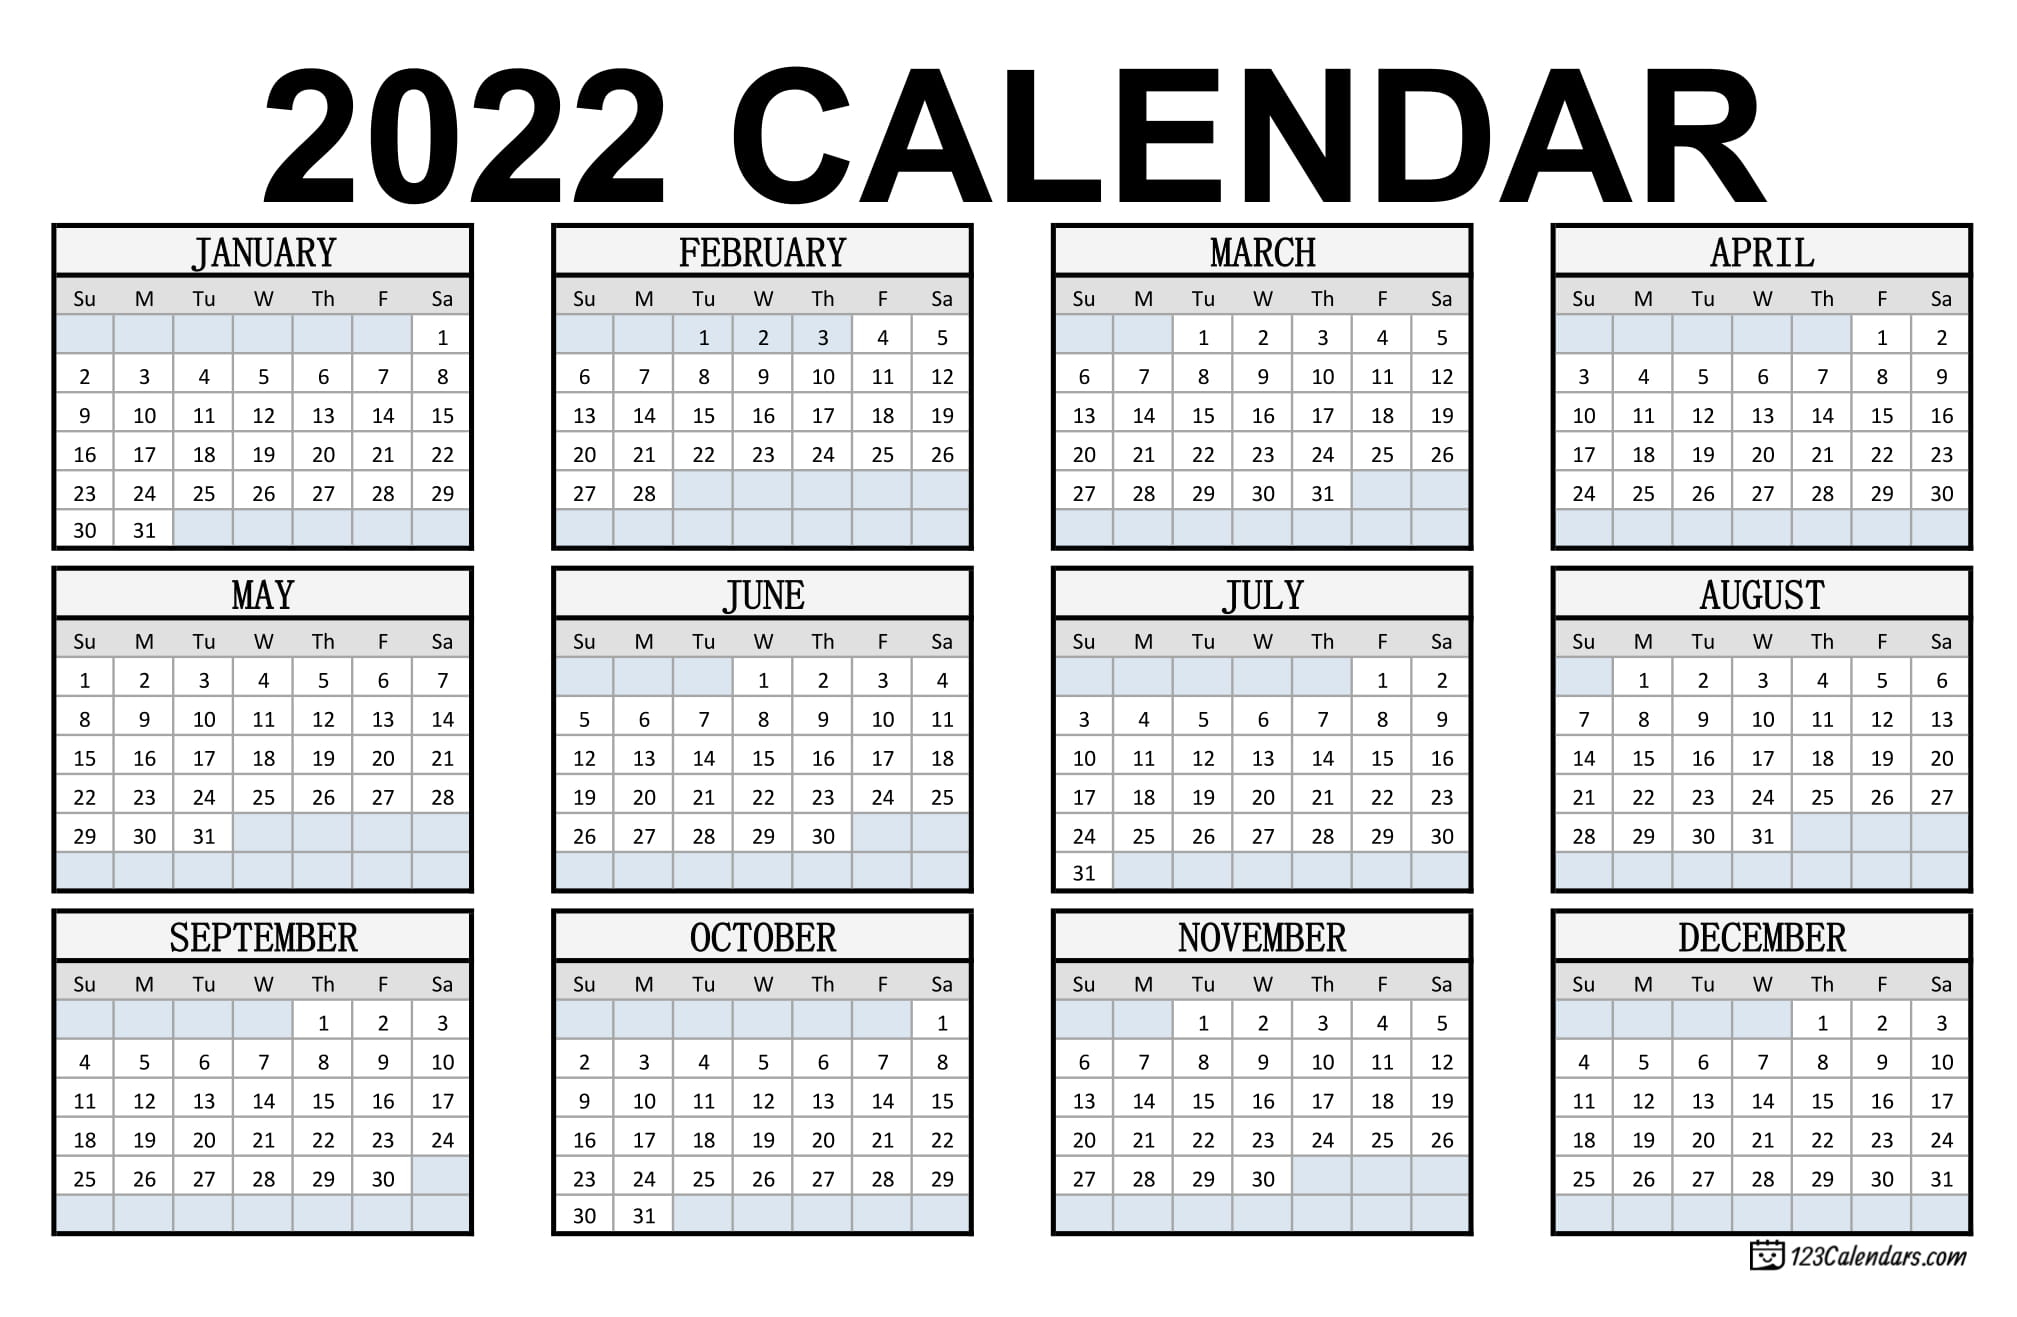 Year 2022 Calendar Templates | 123Calendars within Navy Calendar Squares Template